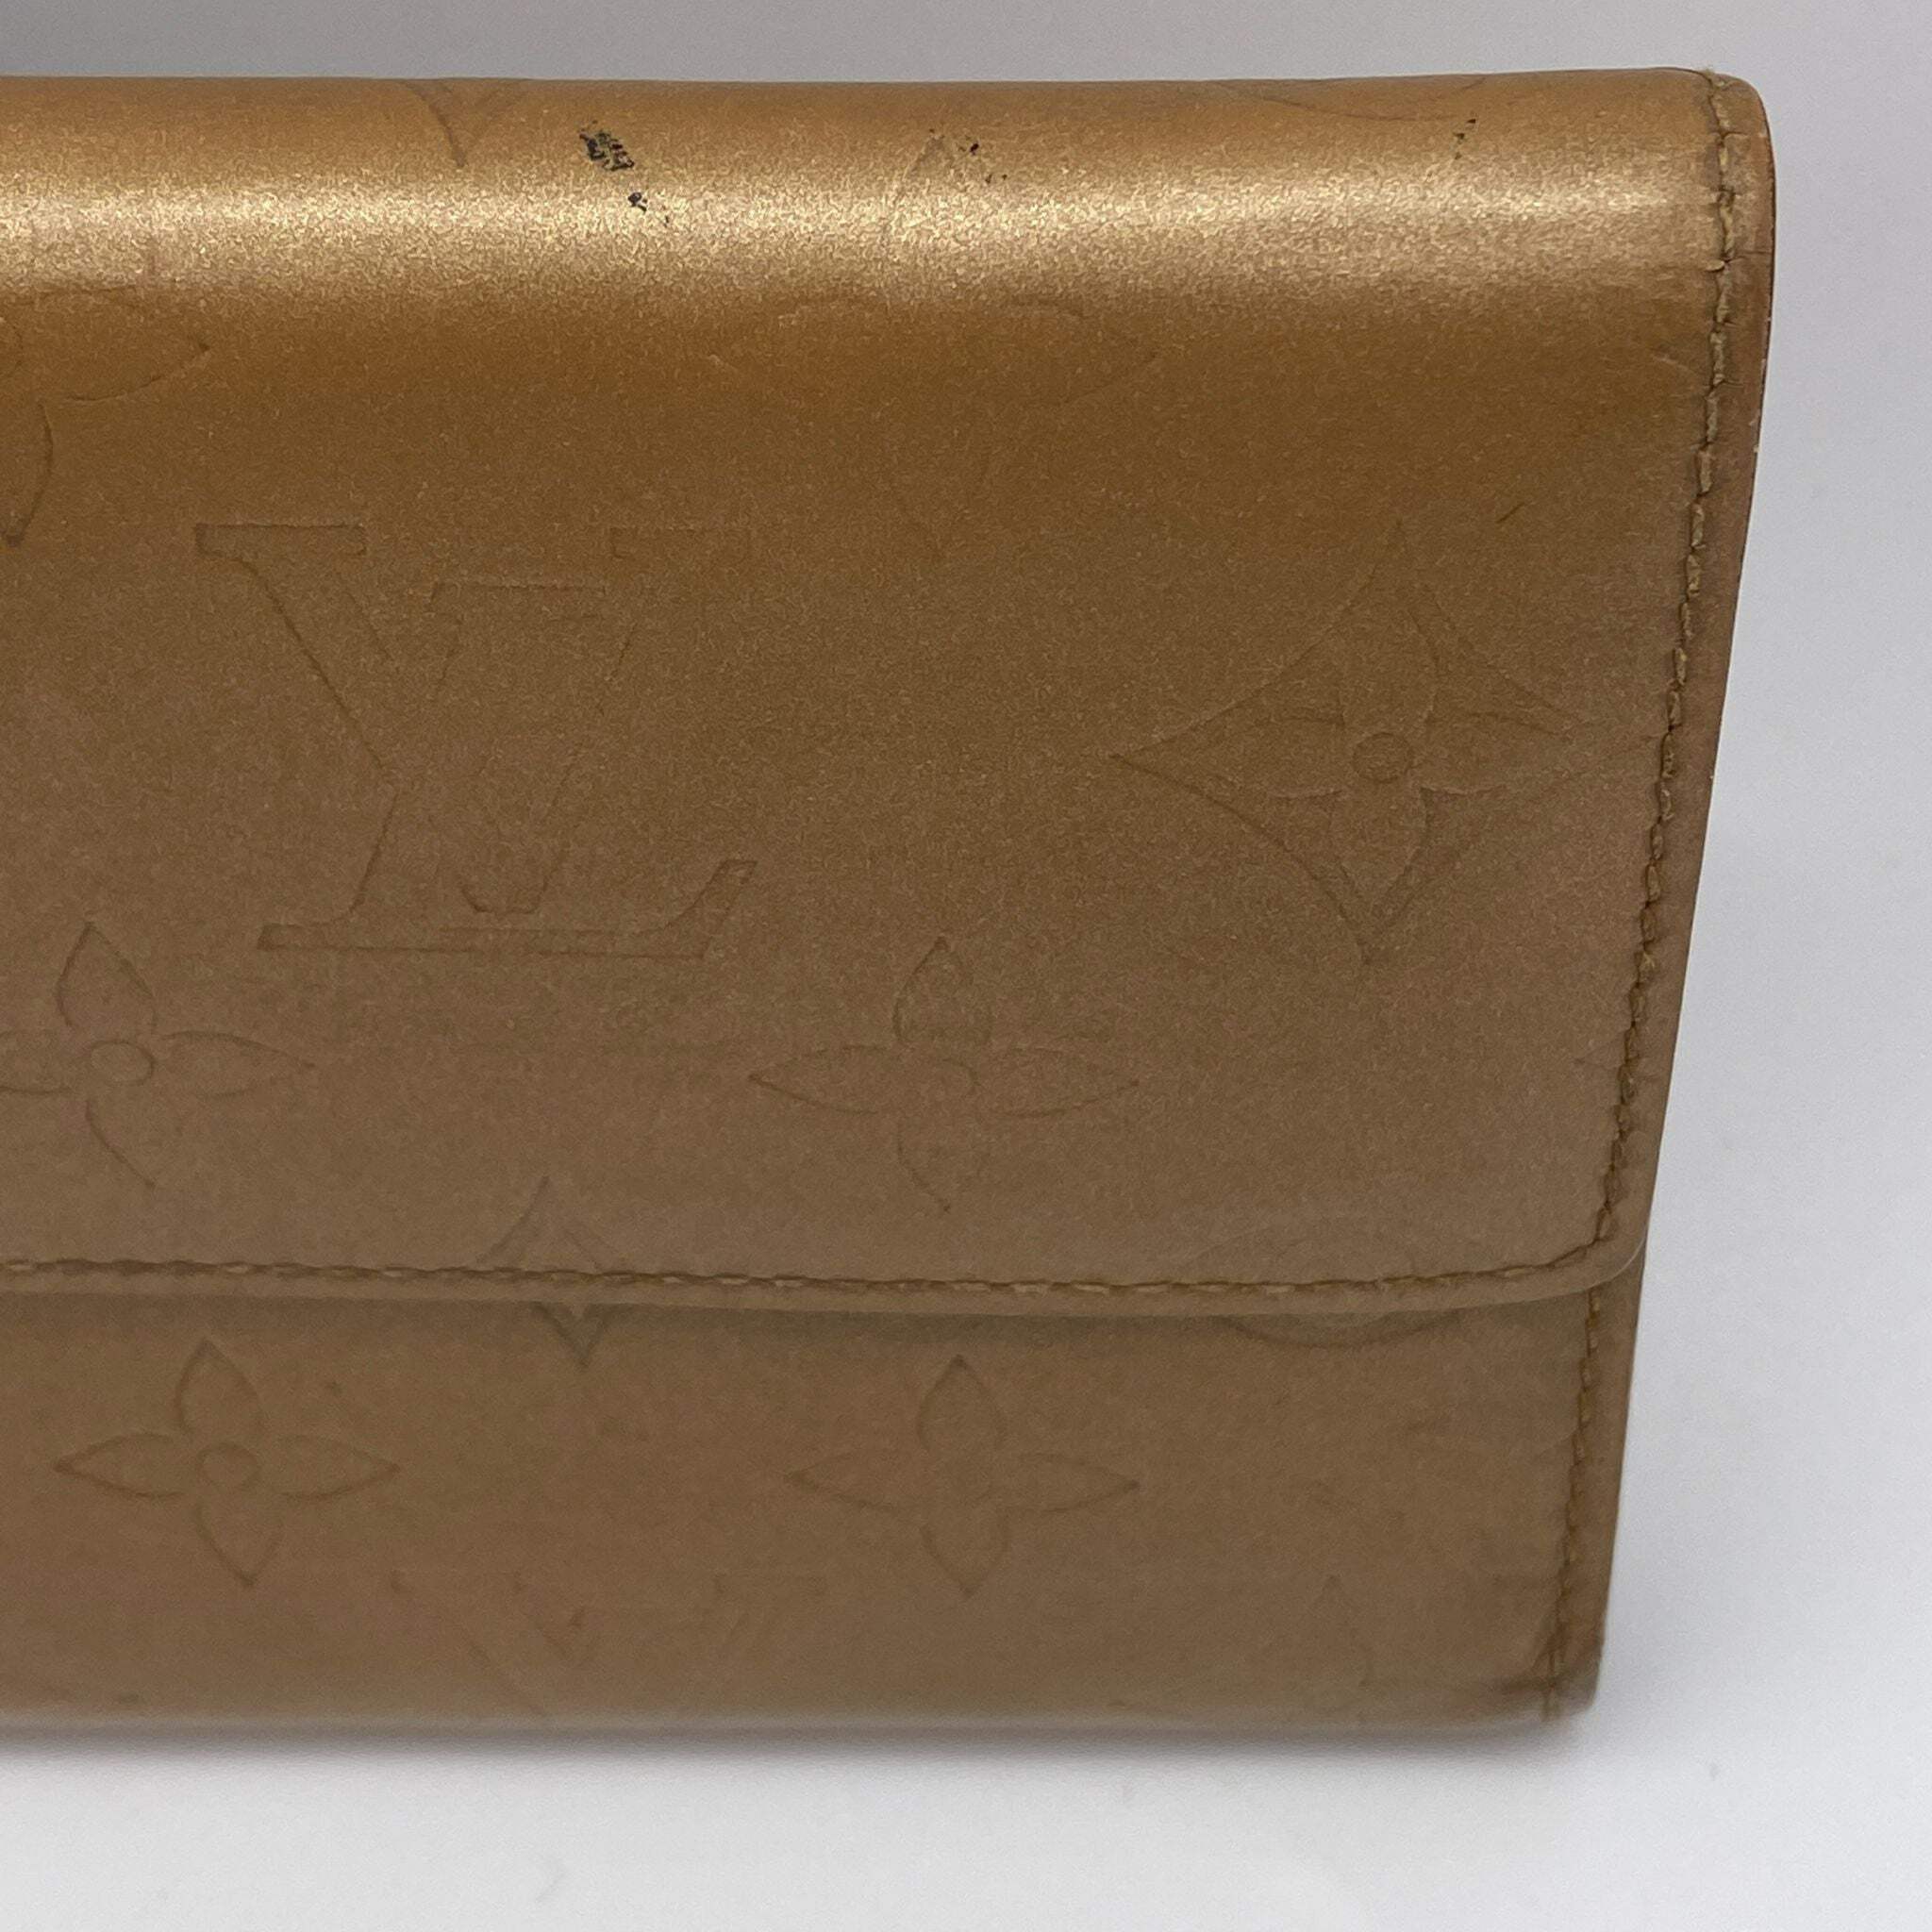 LOUIS VUITTON Monogram Canvas Porte-Tresor International Wallet